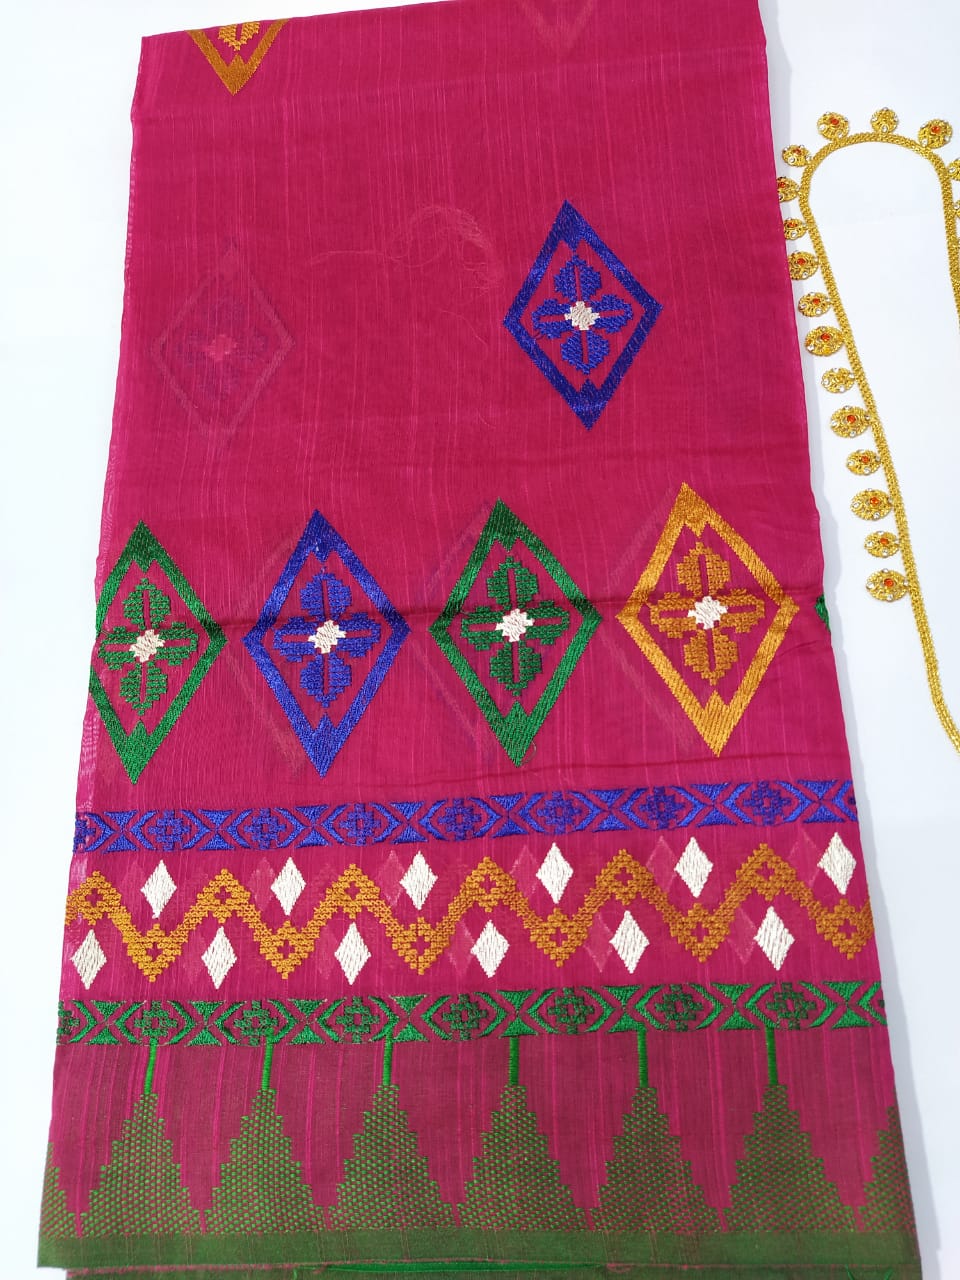 Stylish Manipuri Embroidered Pink Chaddar with Green border